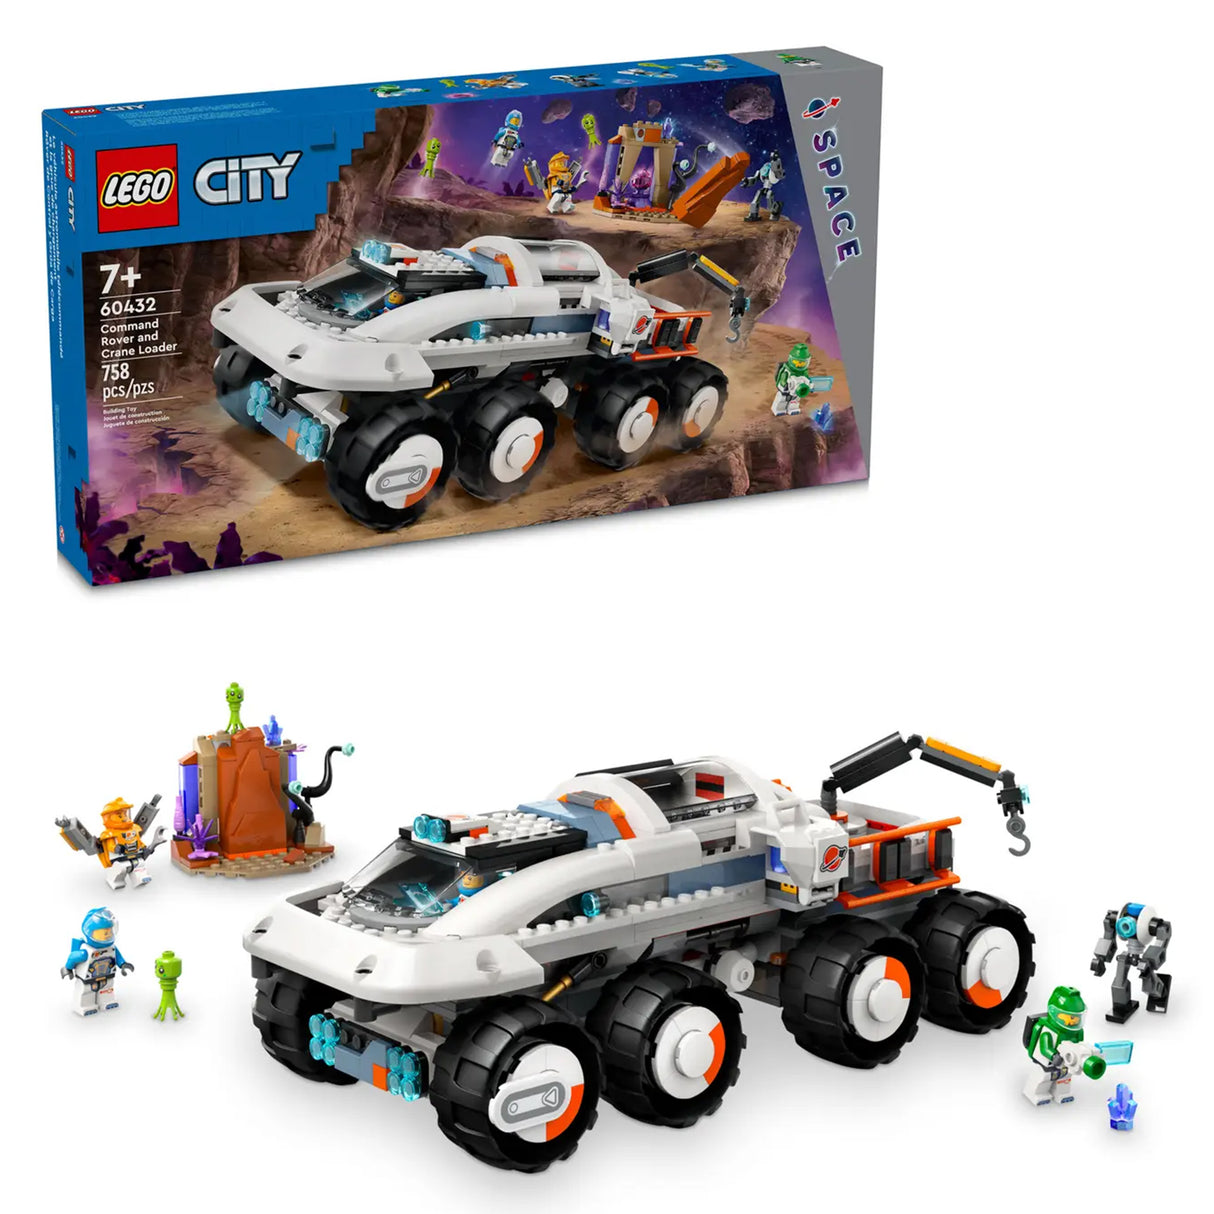 LEGO City Command Rover and Crane Loader 60432, (758-pieces)